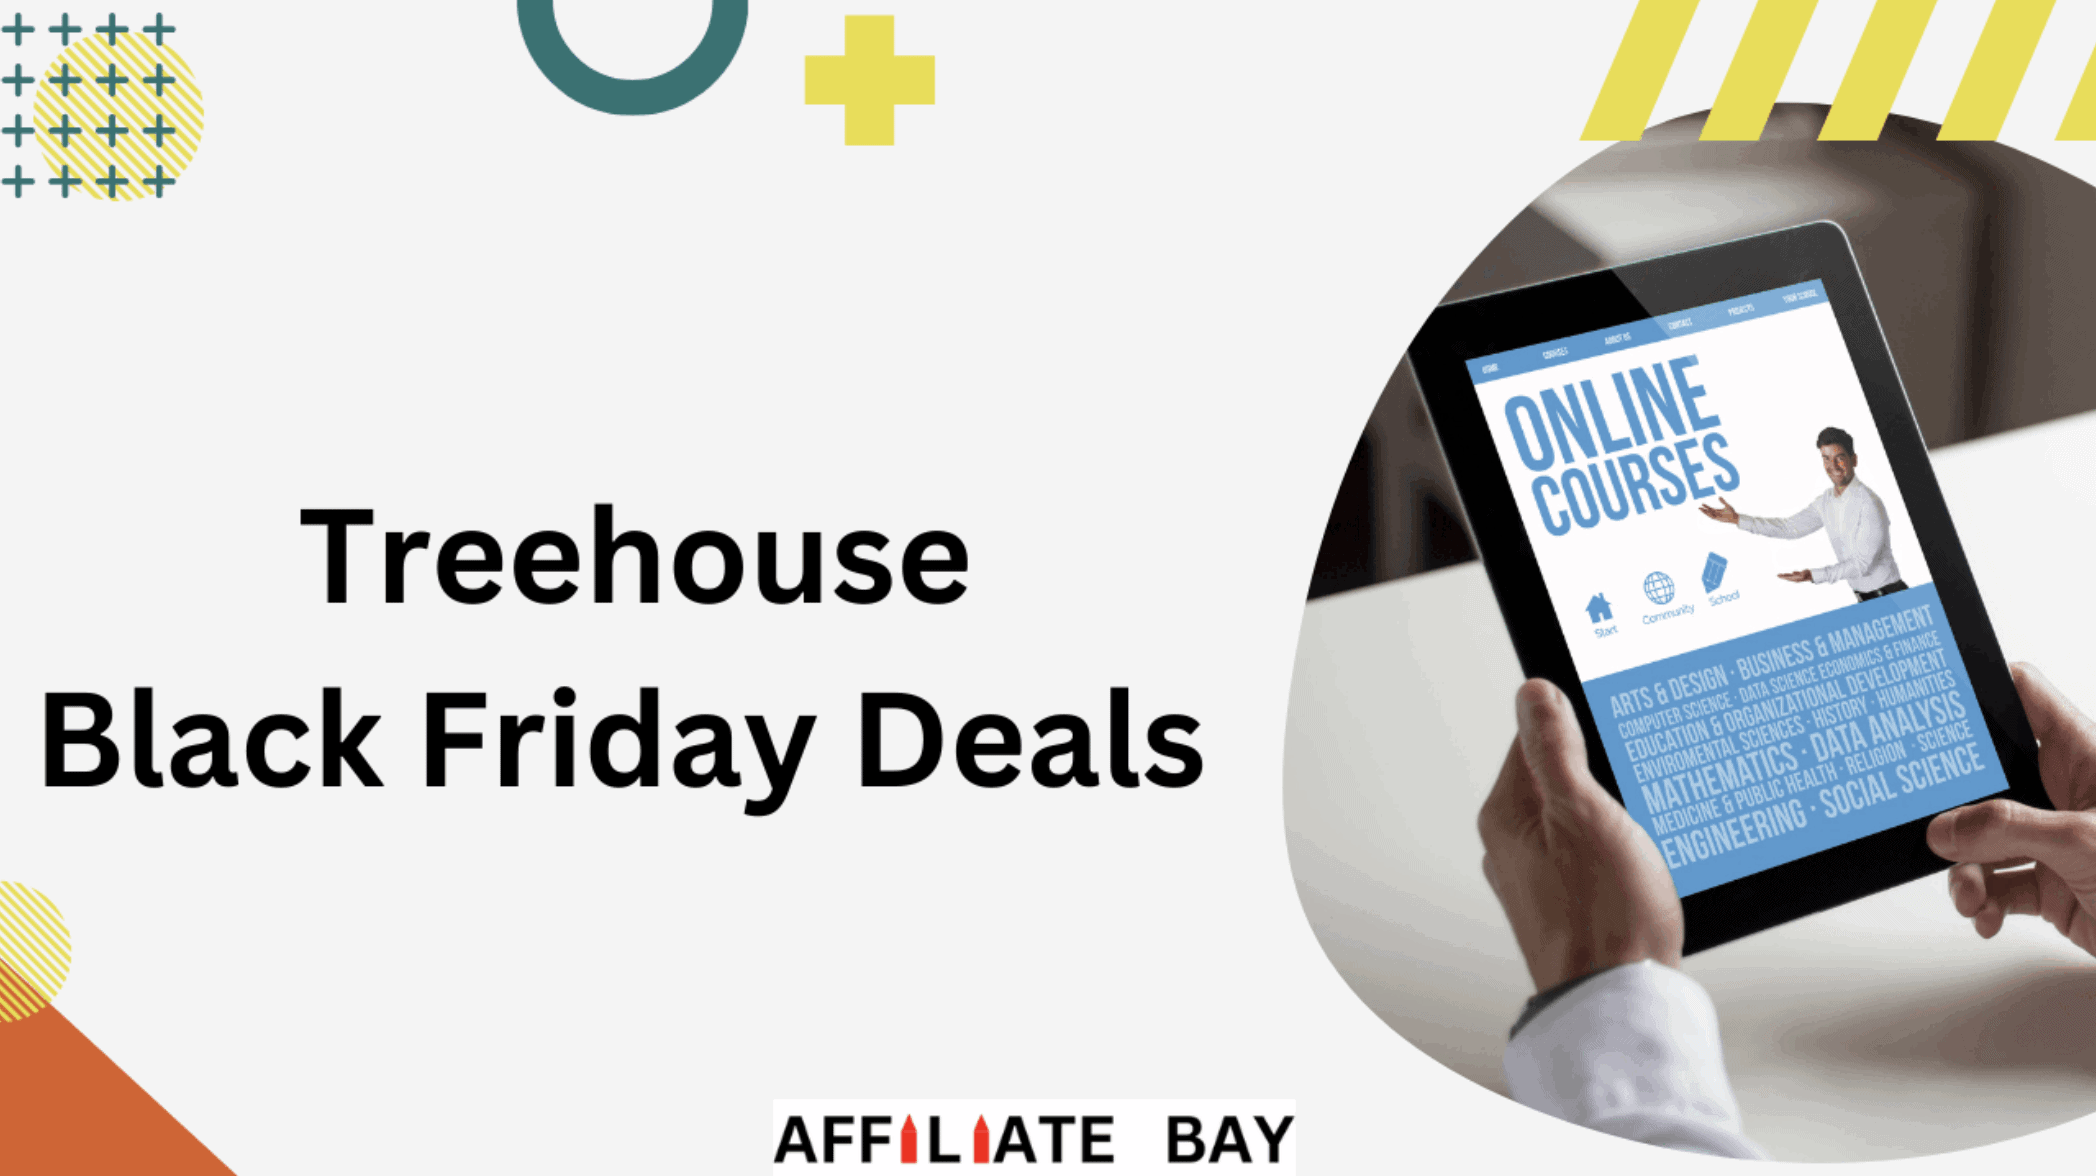 Treehouse Black Friday Deals